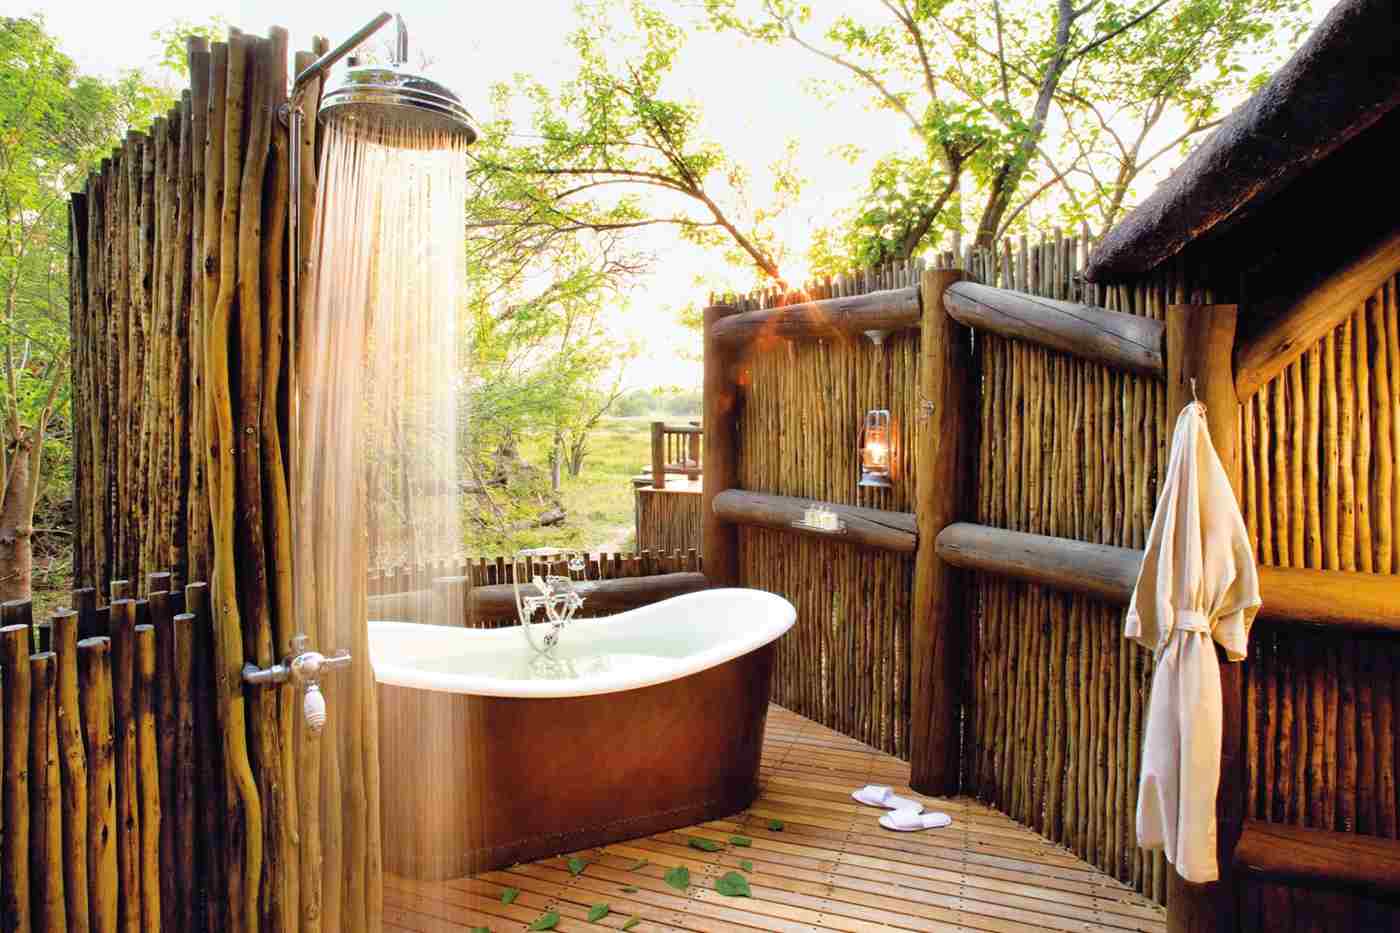 Bathtub in the garden Copper Bambuy search protection rain shower